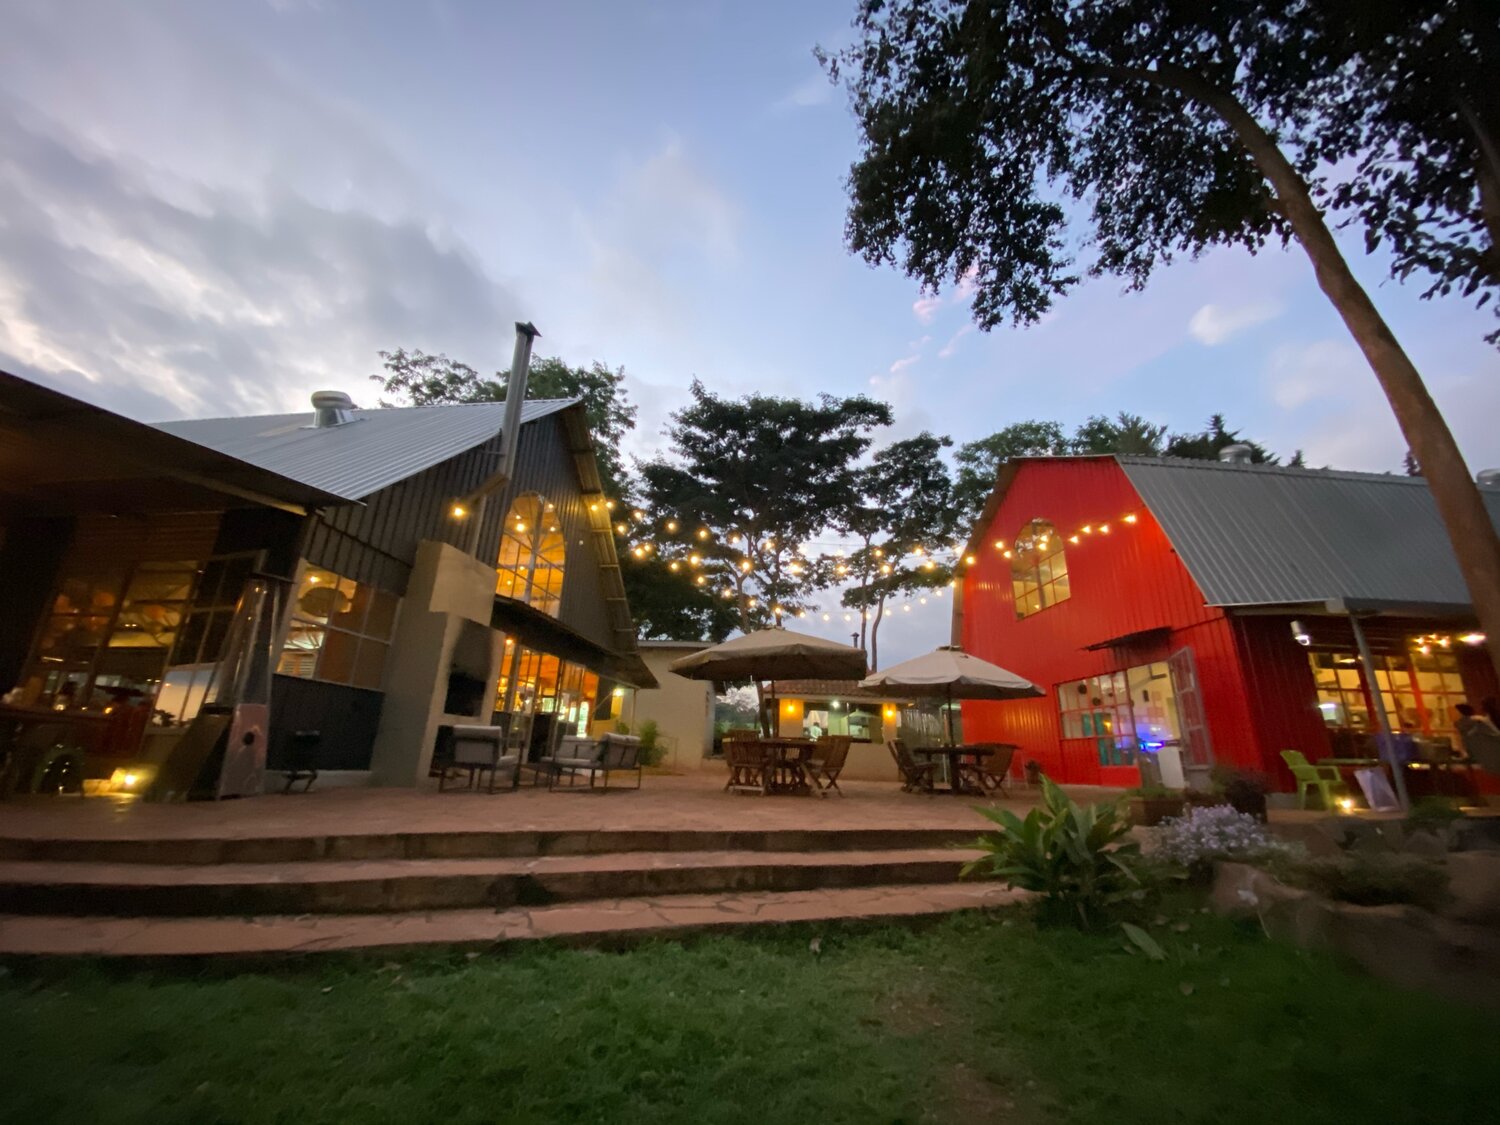 Shamba Cafe & Shop: Inside The Exquisite Nairobi Barn-Style Restaurant 